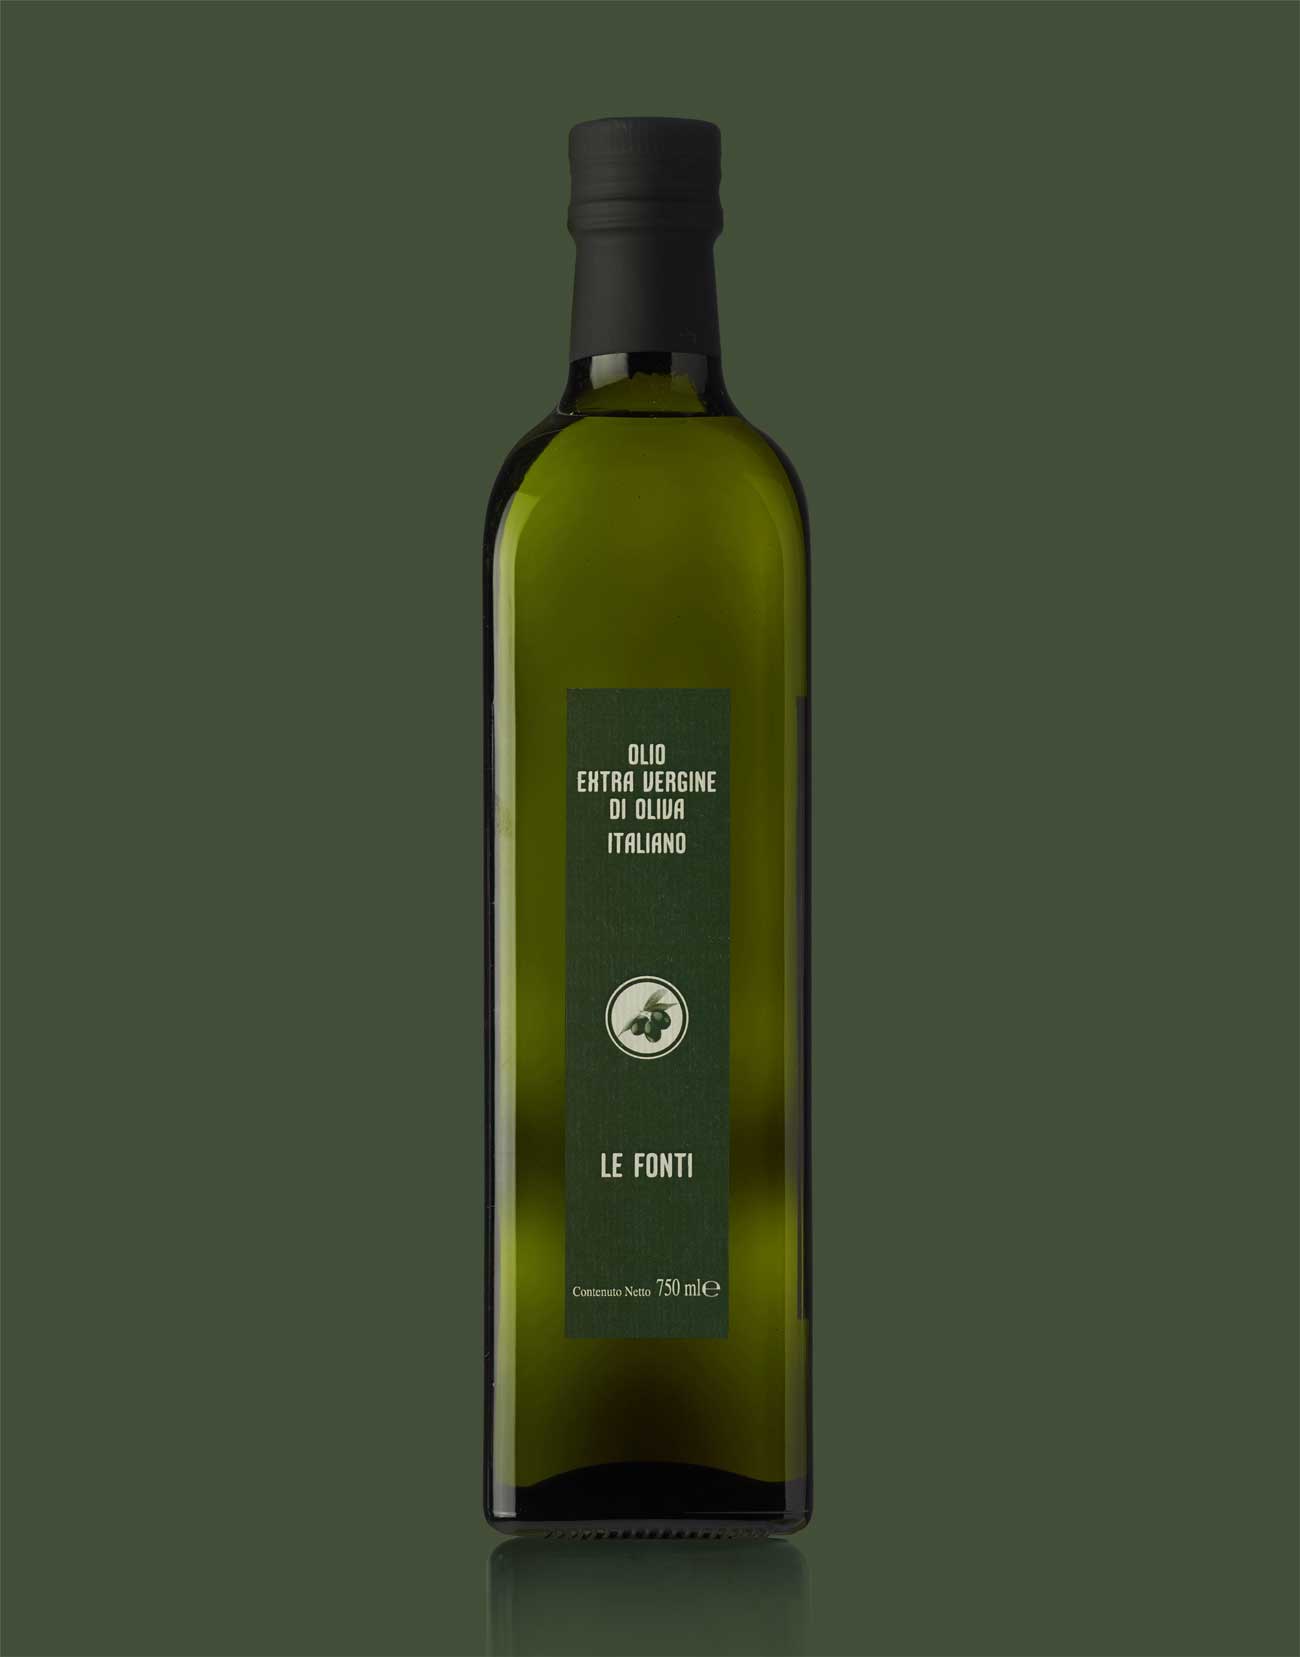 Extra virgin olive Oil